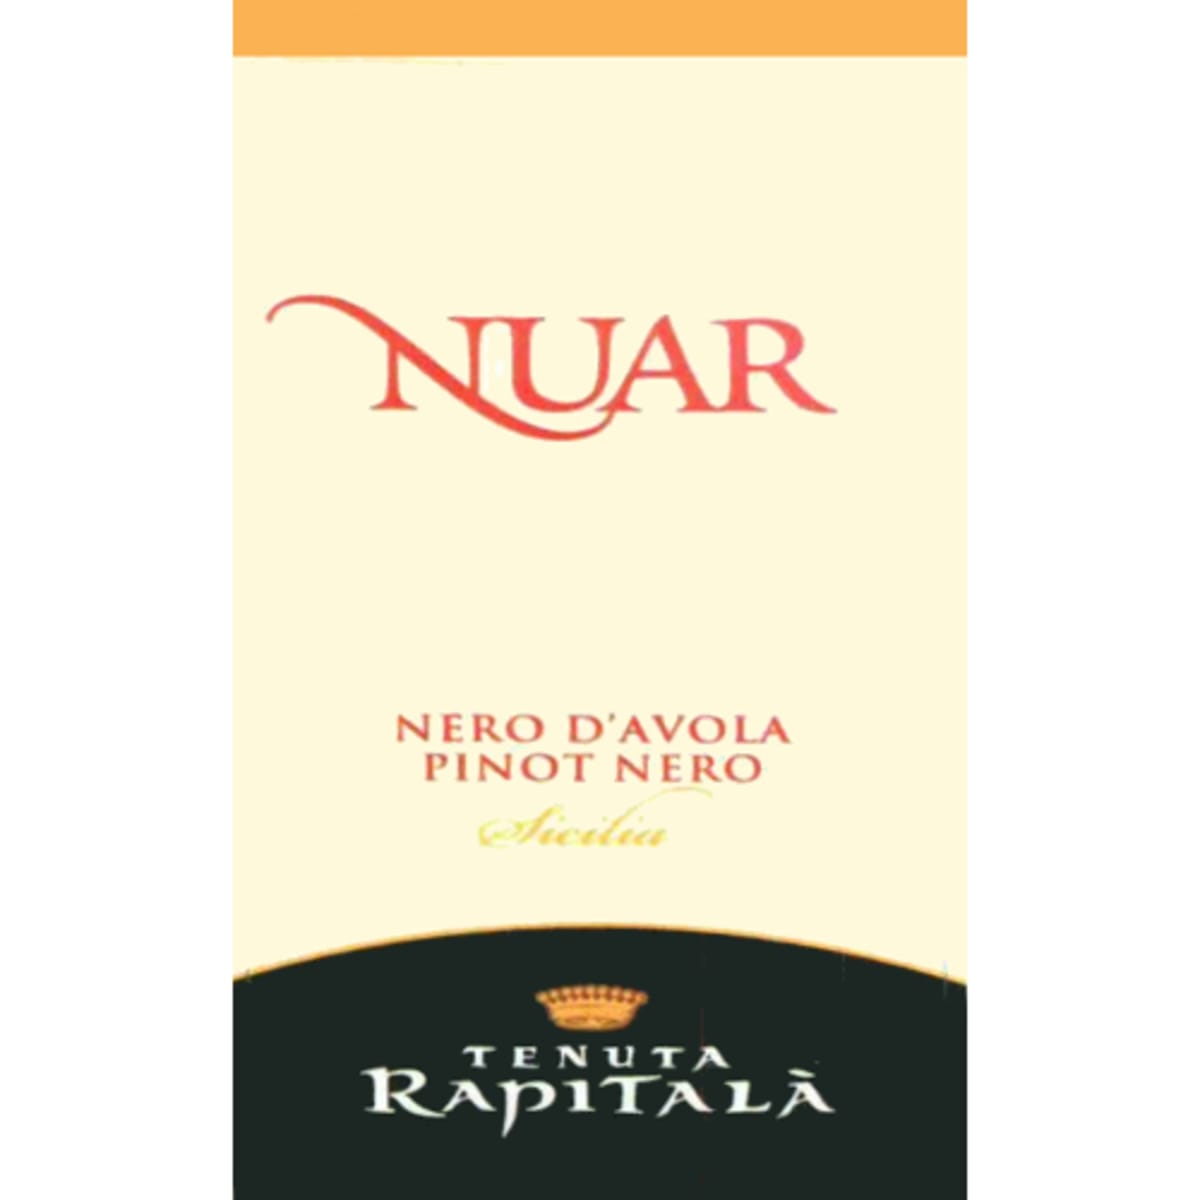 Rapitala Nuhar 2005 Front Label